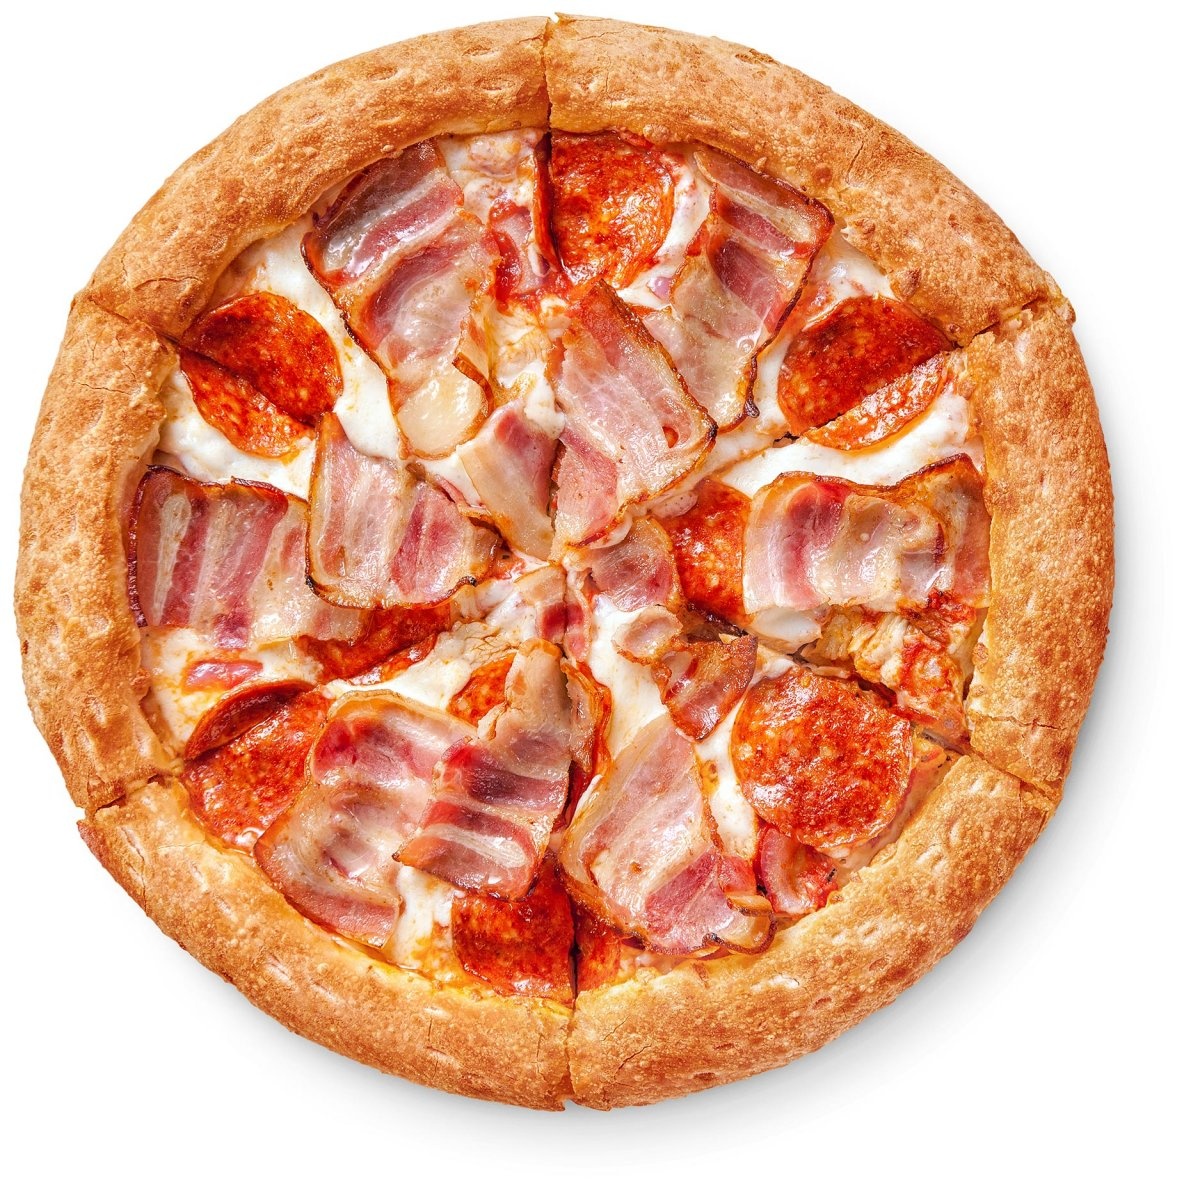 сколько стоит пицца пепперони в додо пицце фото 105